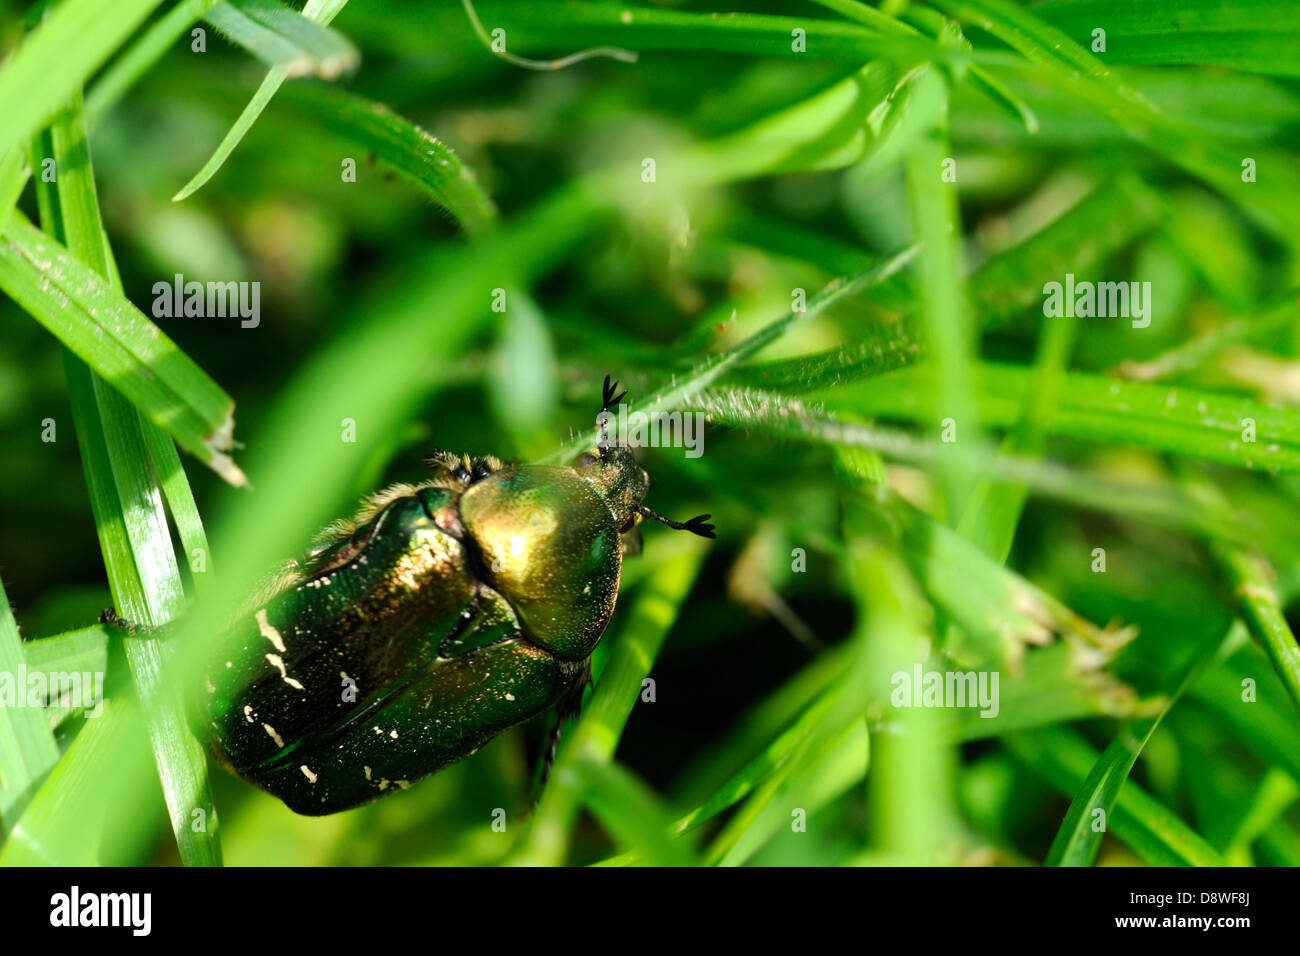 Rose chafer (Cetonia aurata) on green grass Stock Photo